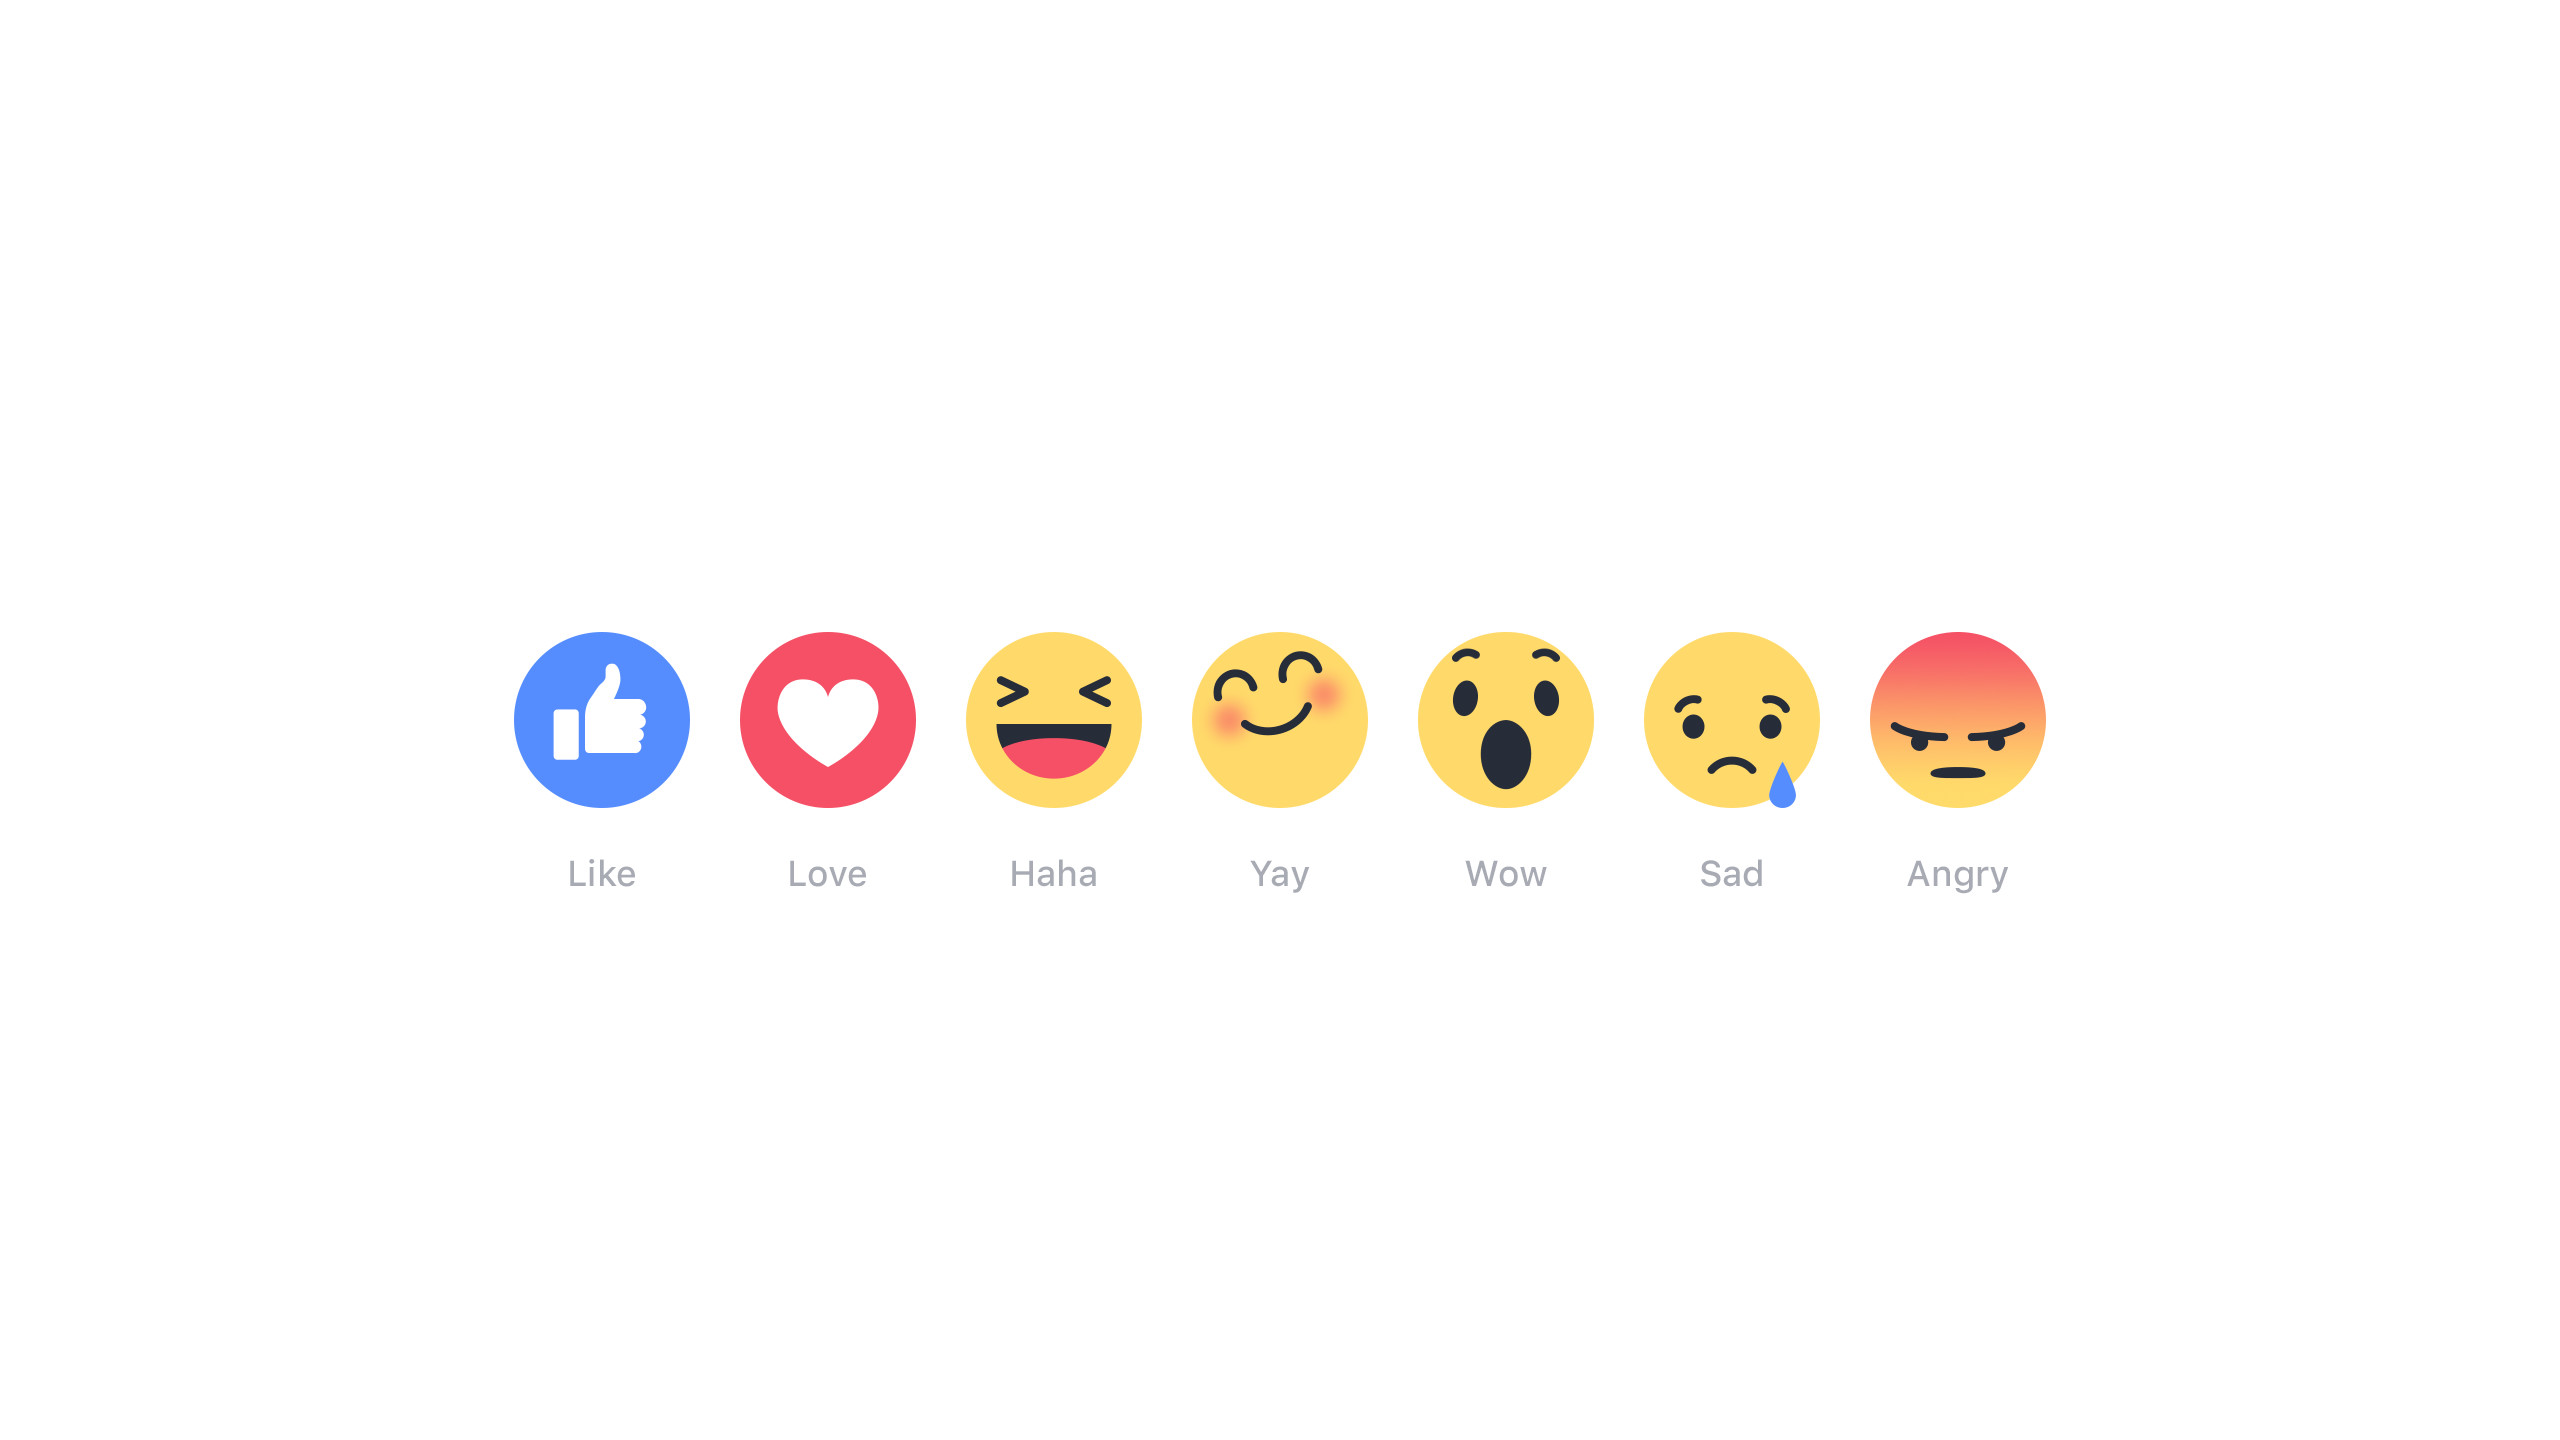 2560x1440 Love, Haha, Wow, Sad, Angry: Facebook Debuts New Reaction Emojis